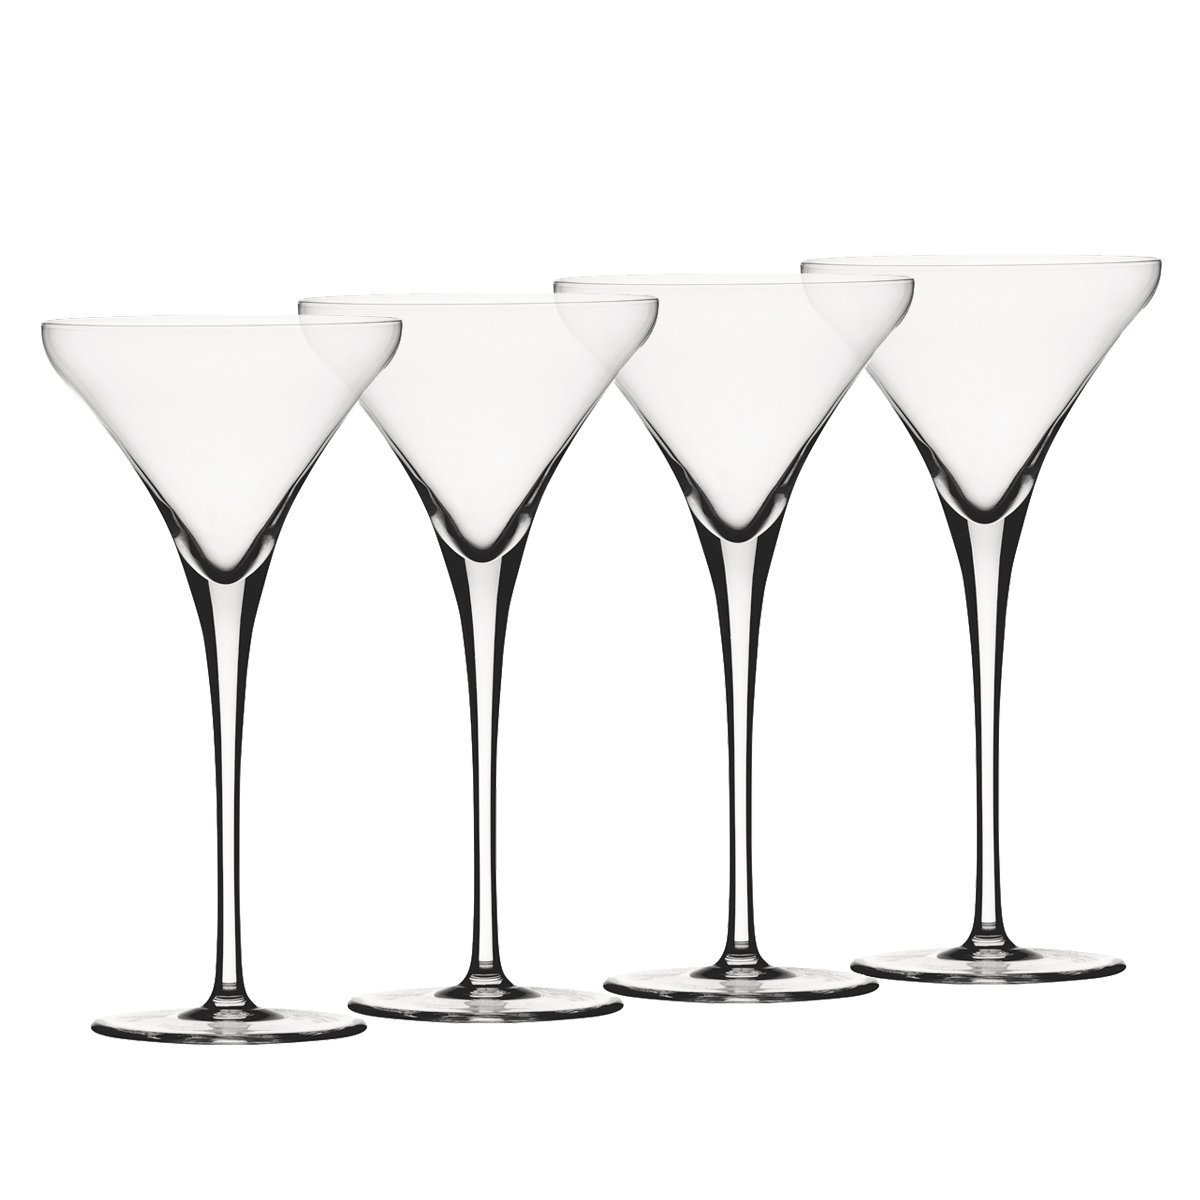 1416150 9.2 Oz Willsberger Martini Glass - Set Of 4